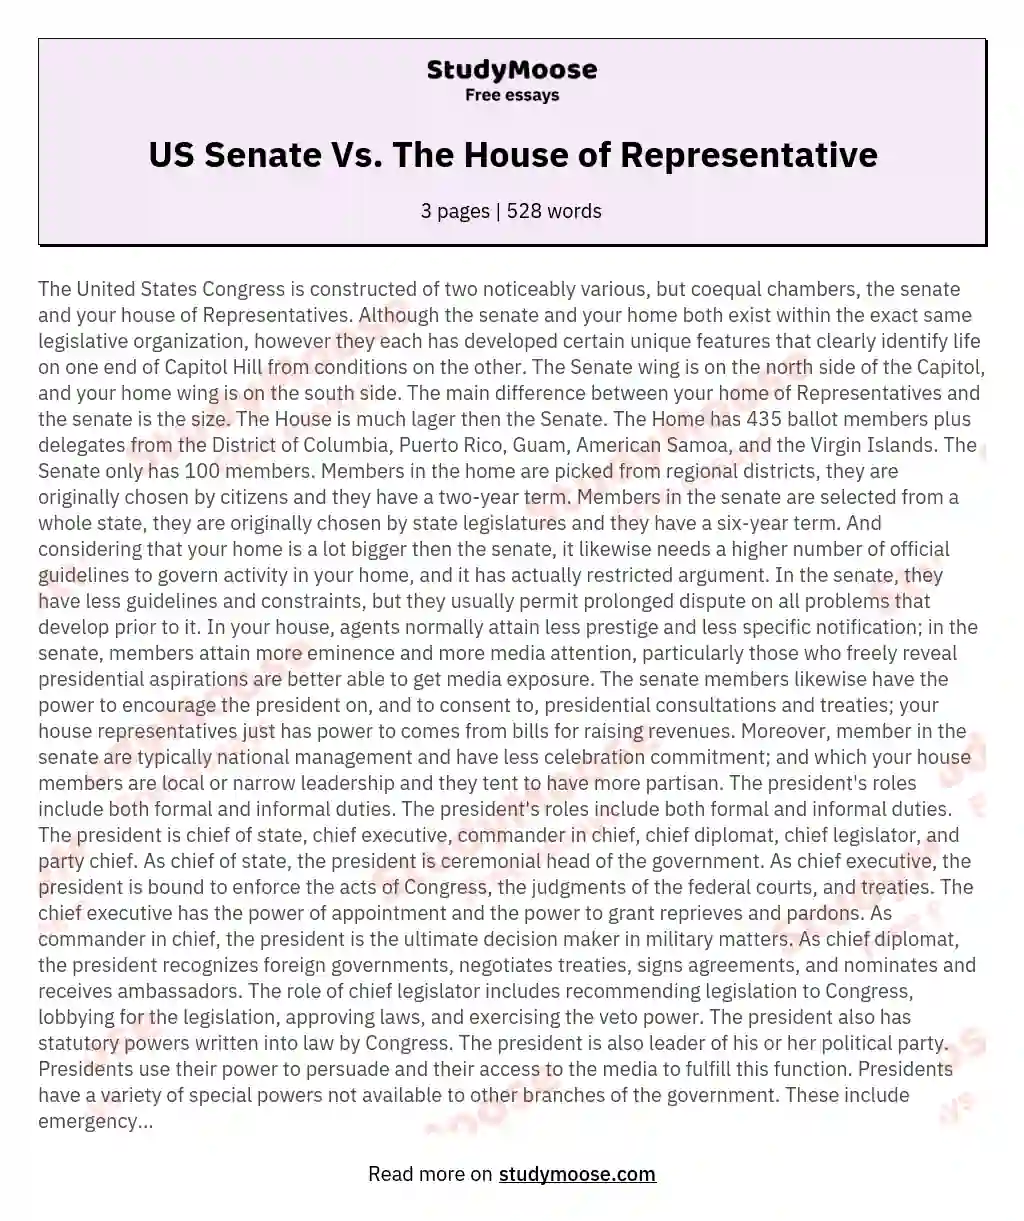 US Senate Vs. The House of Representative